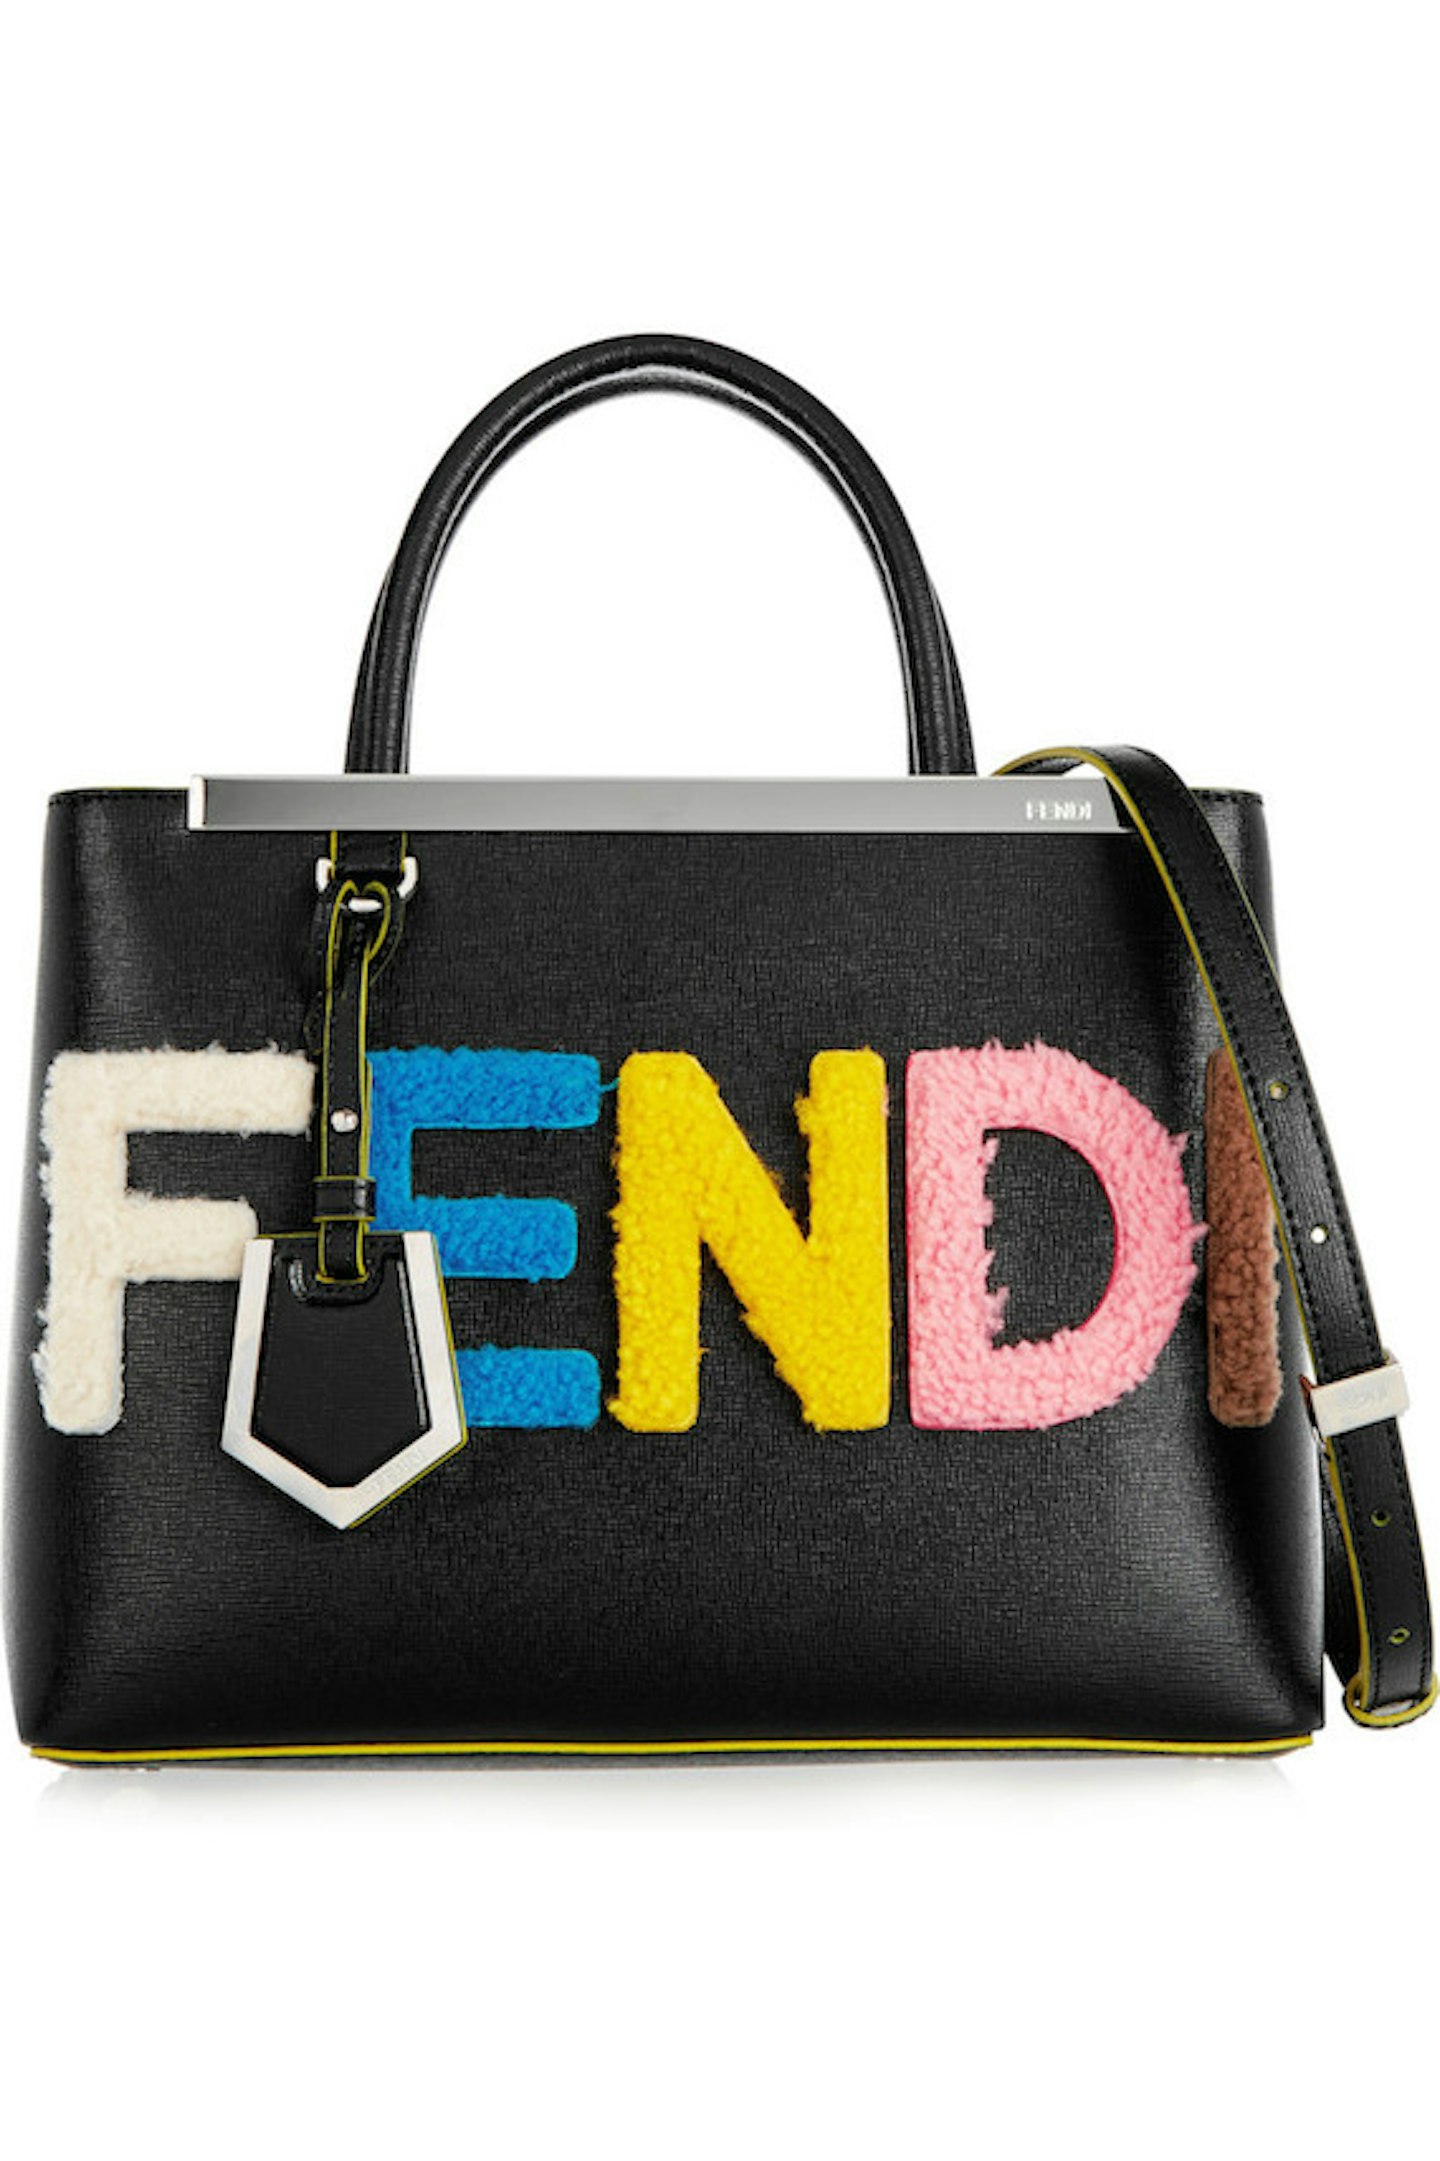 Fendi Logo Bag